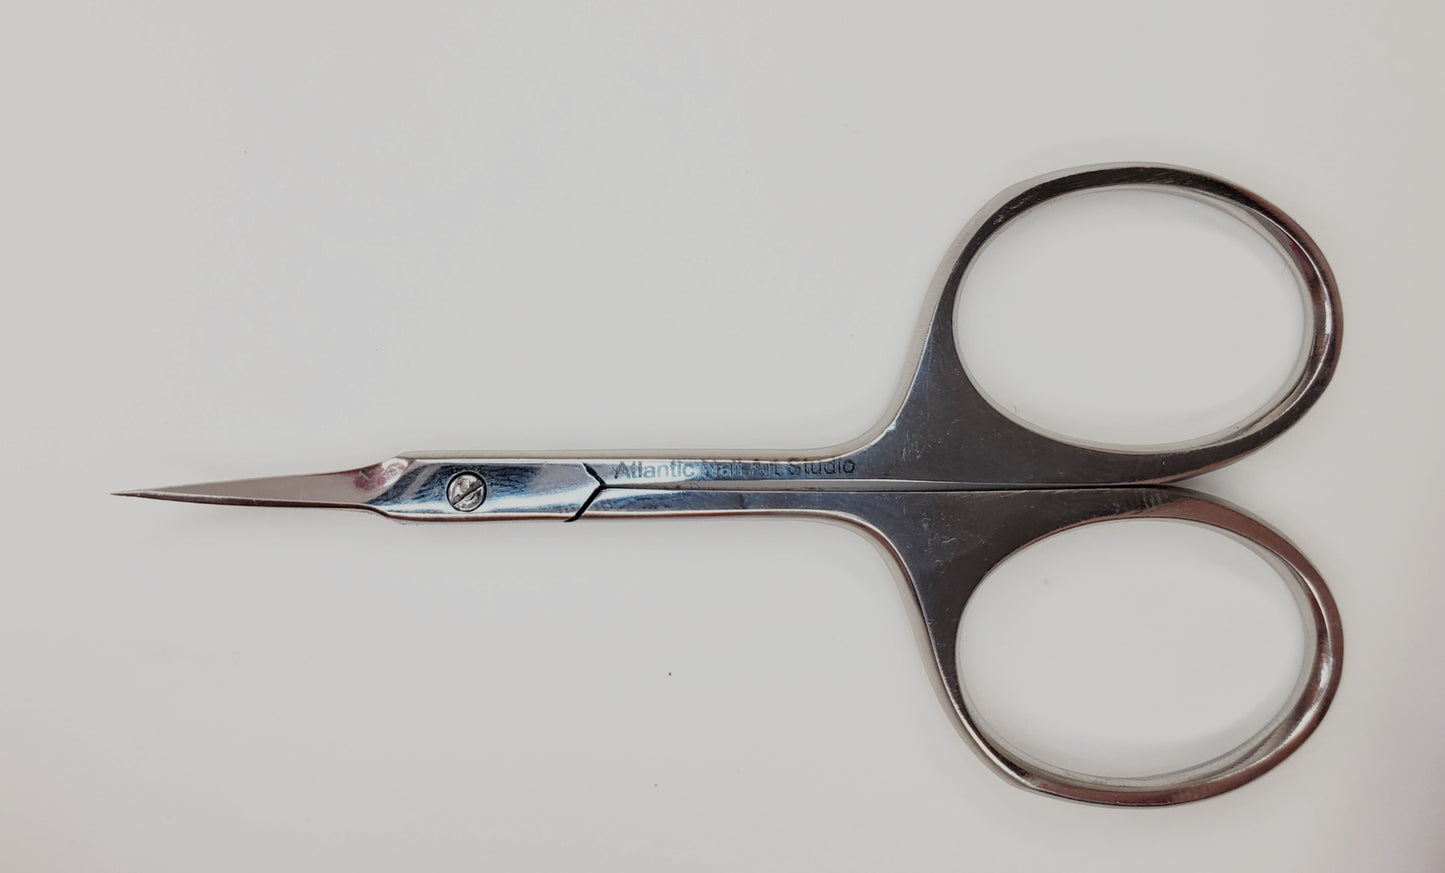 Atlantic Nail Art Studio - Cuticle scissors 92.24.